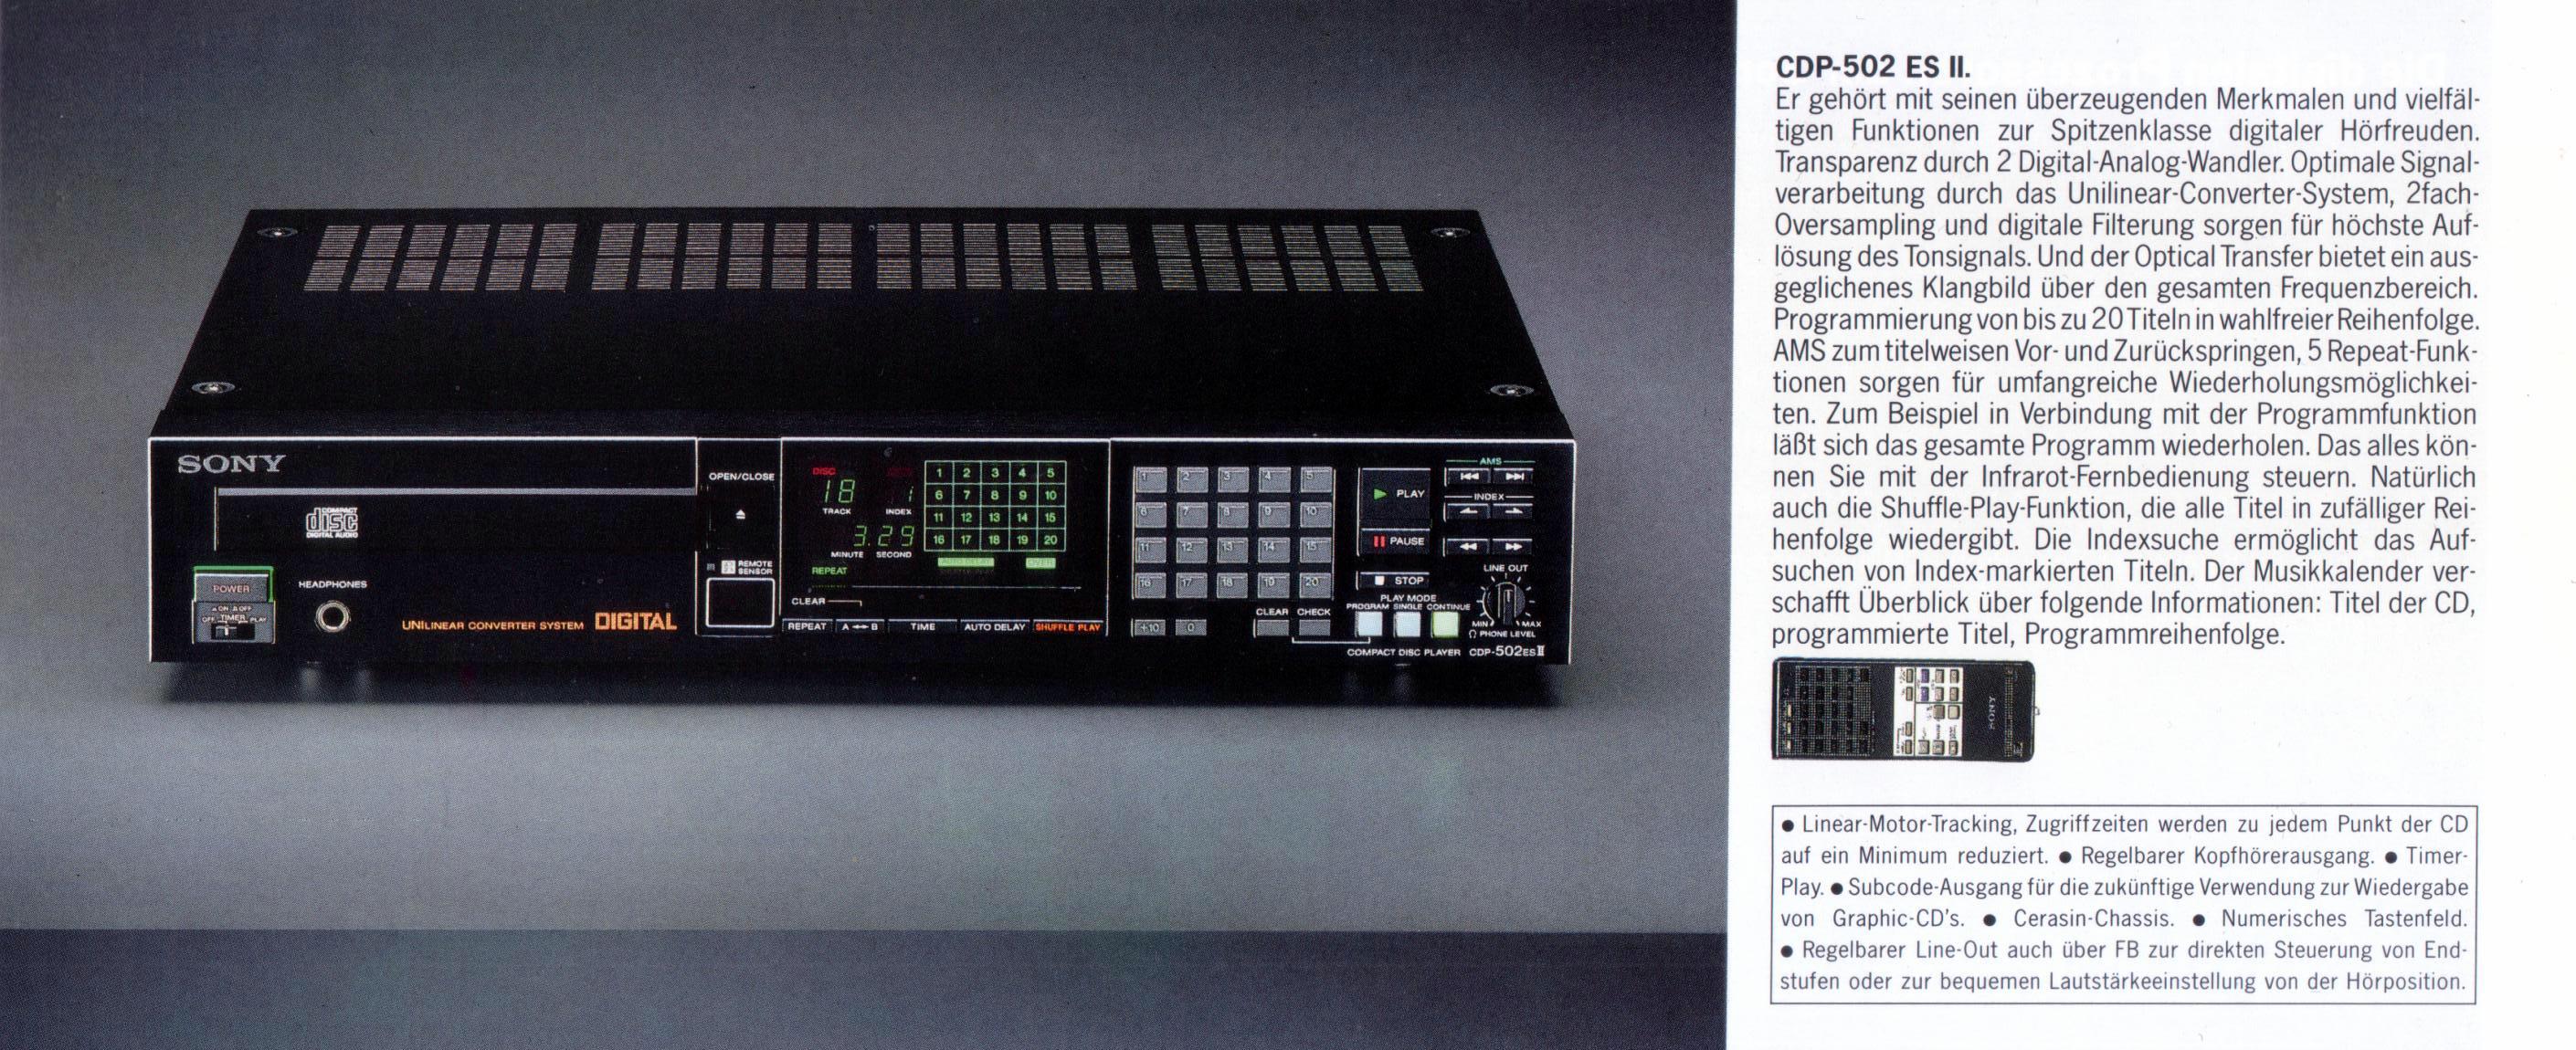 Sony CDP-502 ES II-Prospekt-1987.jpg